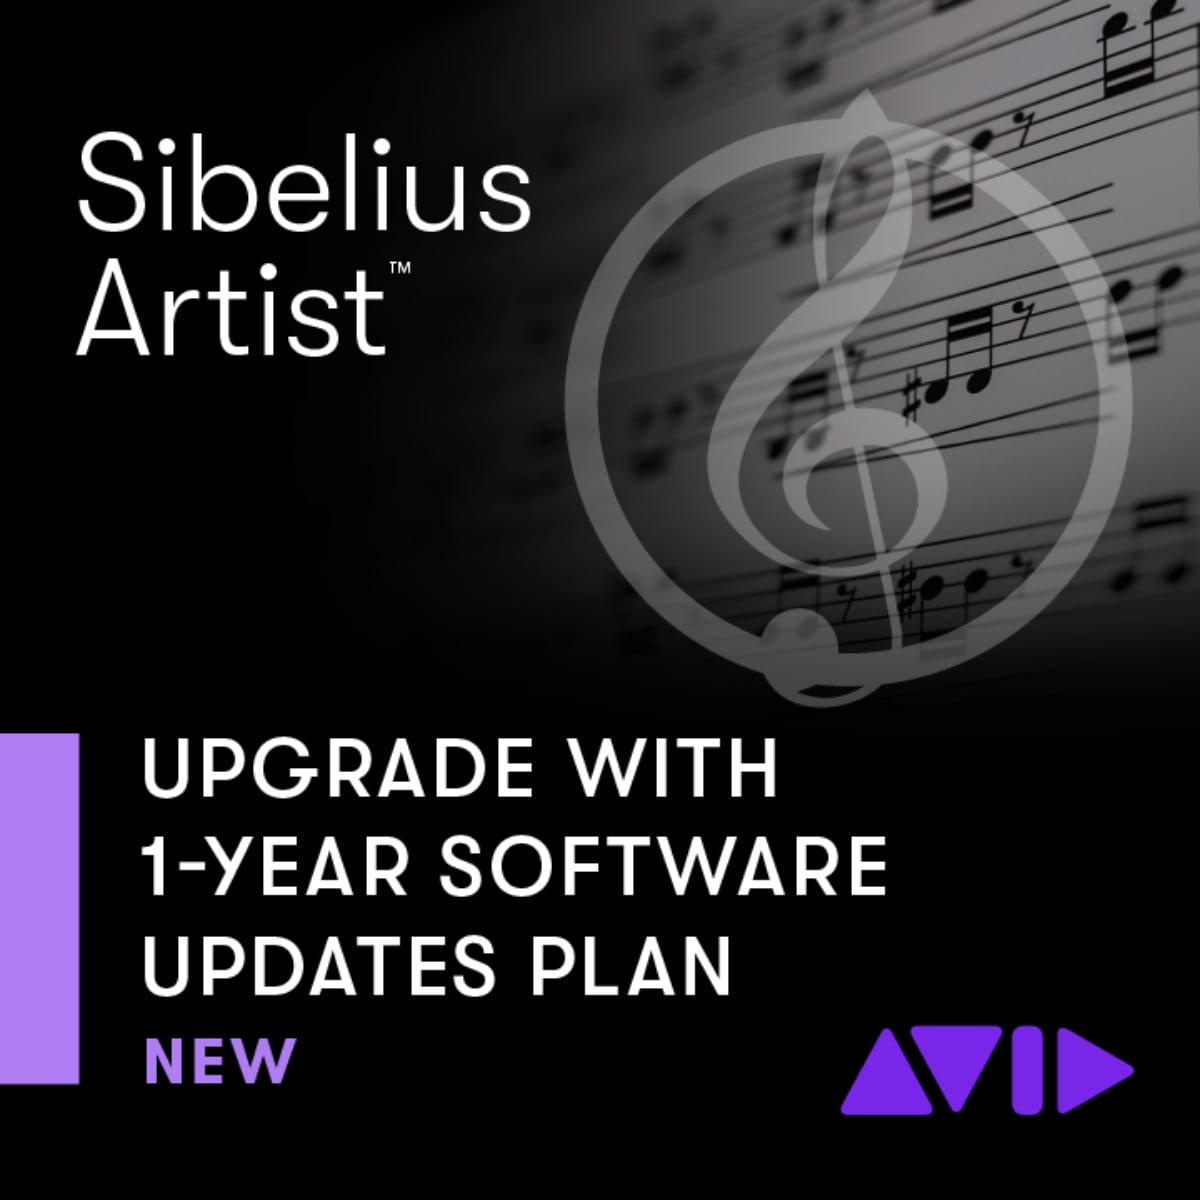 AVID Sibelius | Artist Upgrade with 1-Year Software Updates Plan